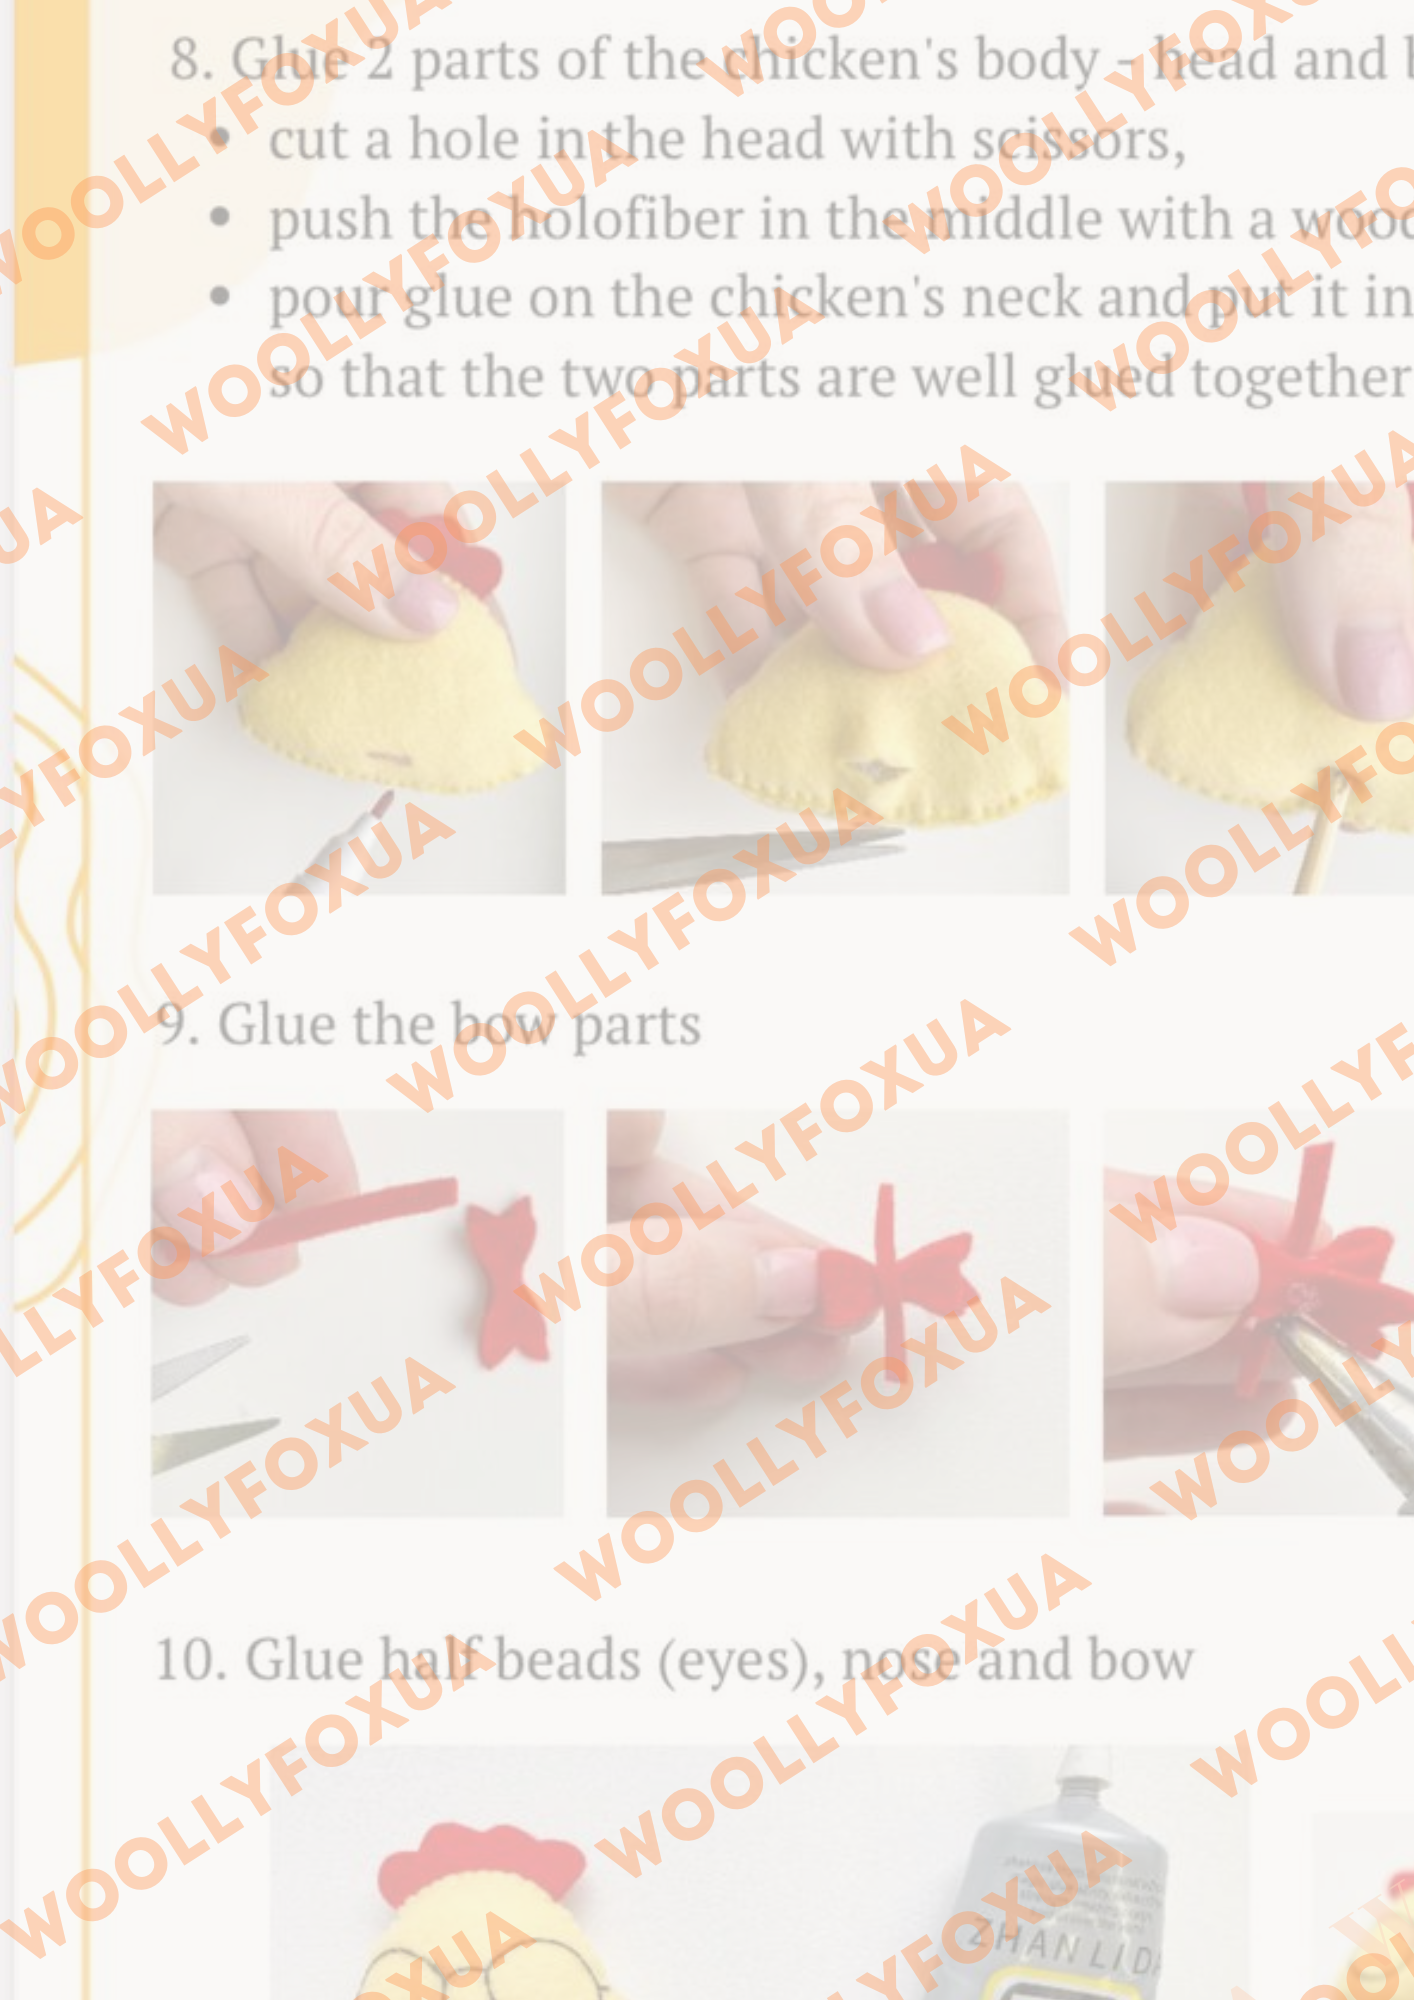 PDF pattern Felt Chick toy Easter Ornament Pattern Felt Sewing Pattern